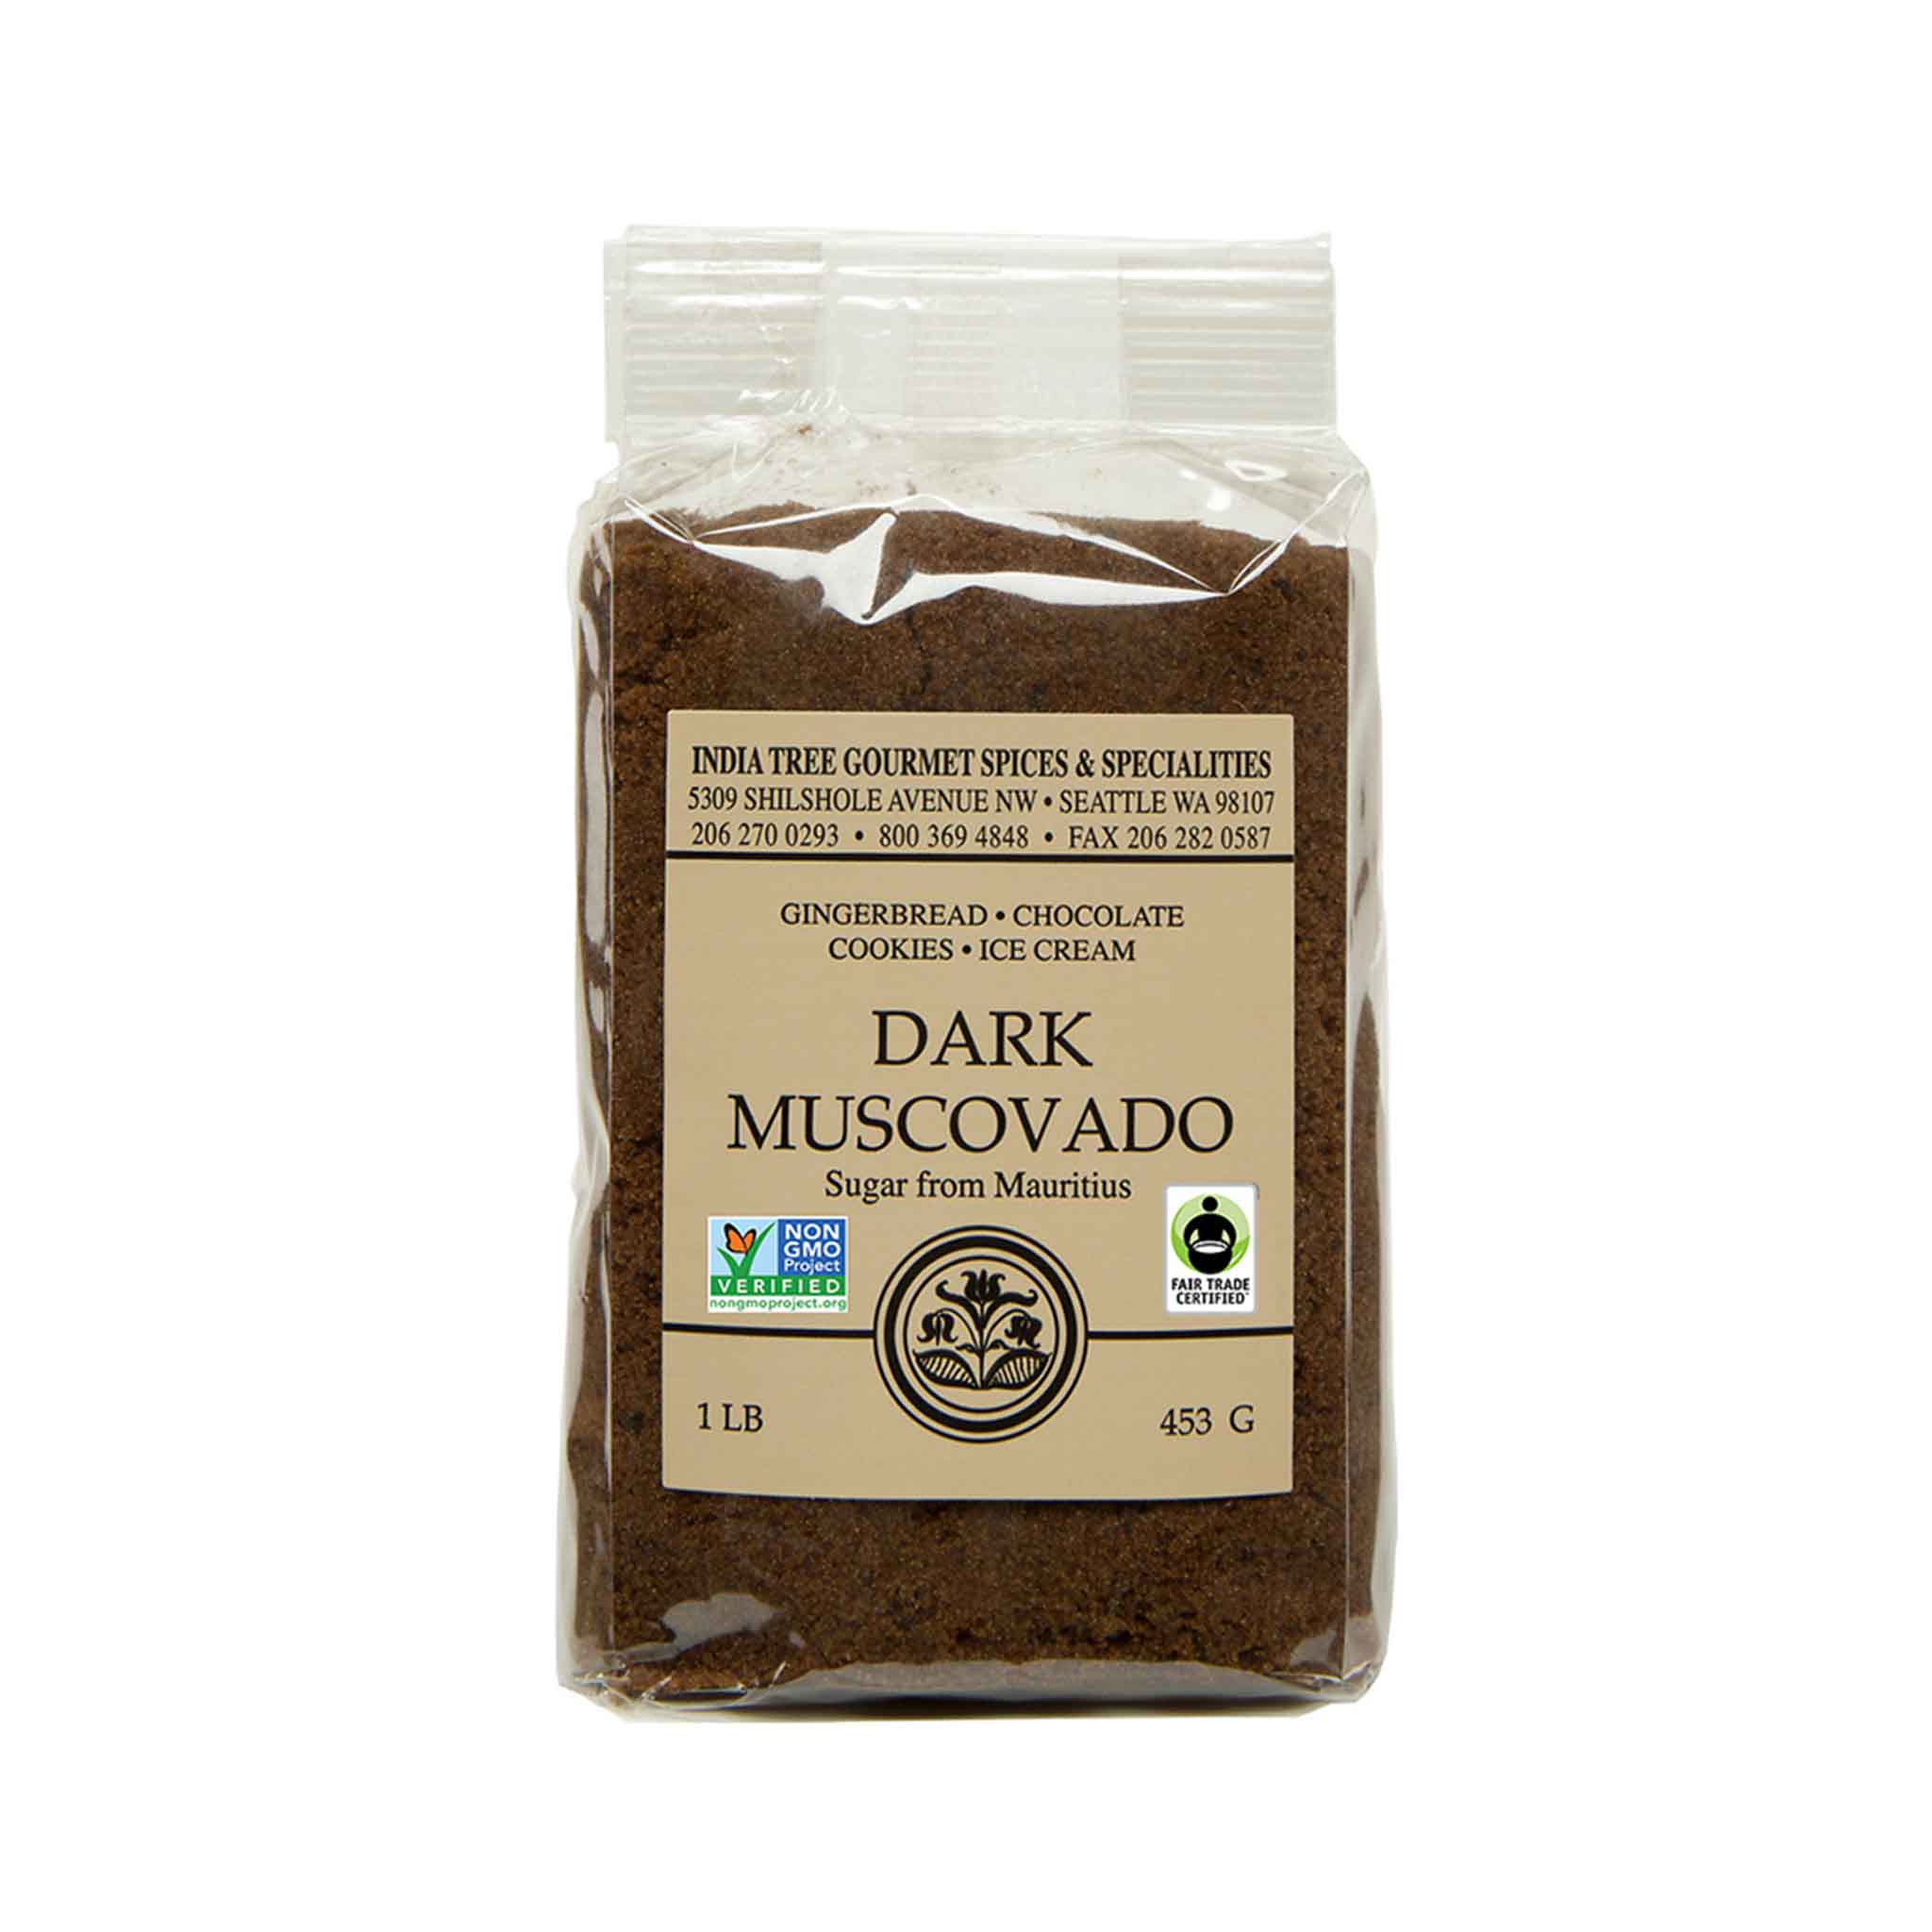 Dark Muscovado Sugar from Mauritius